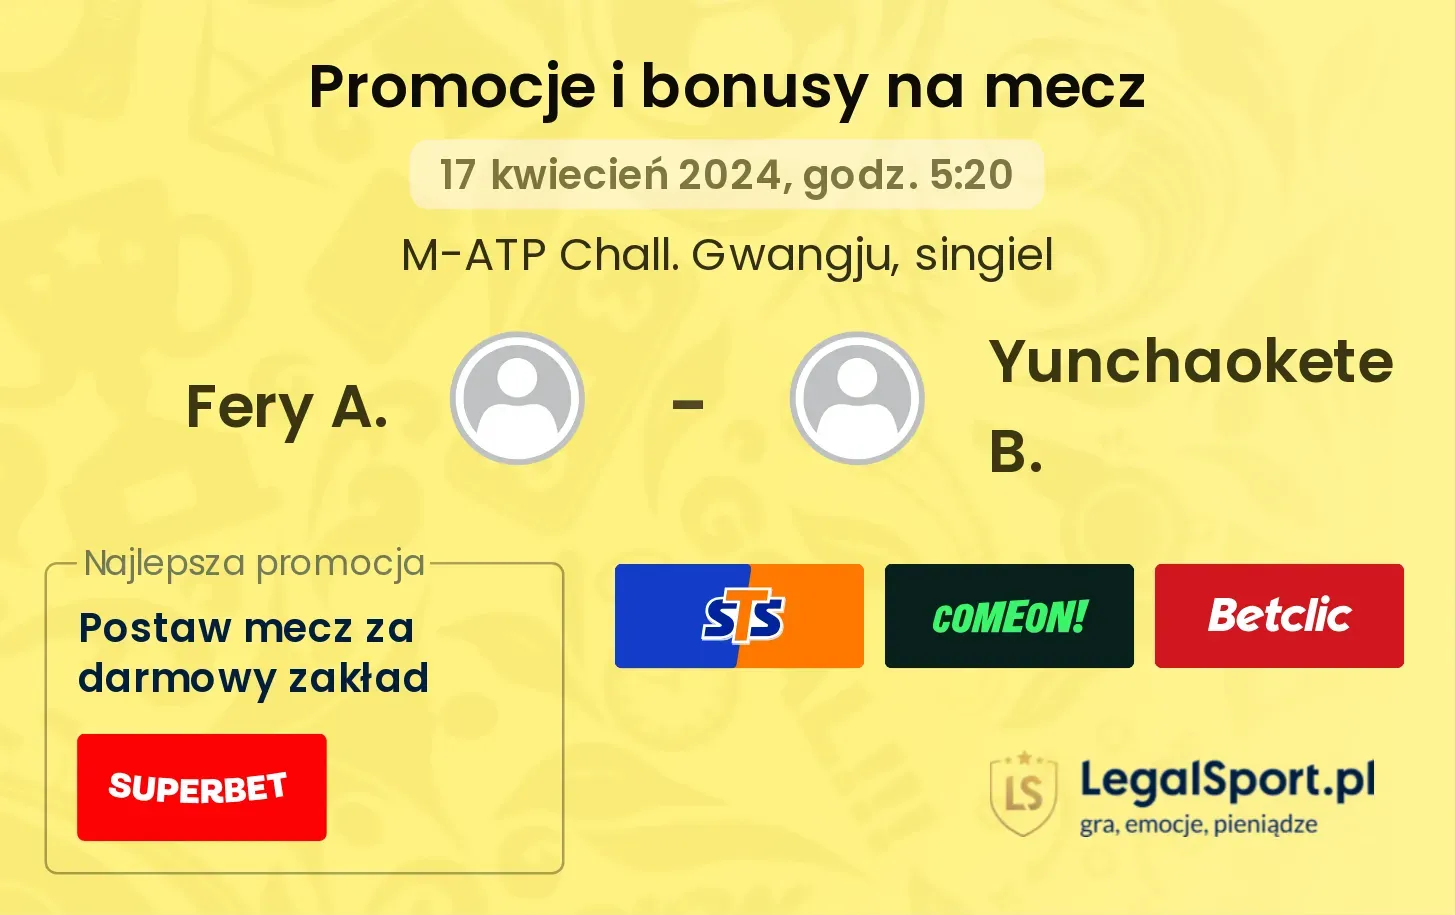 Fery A. - Yunchaokete B. promocje bonusy na mecz